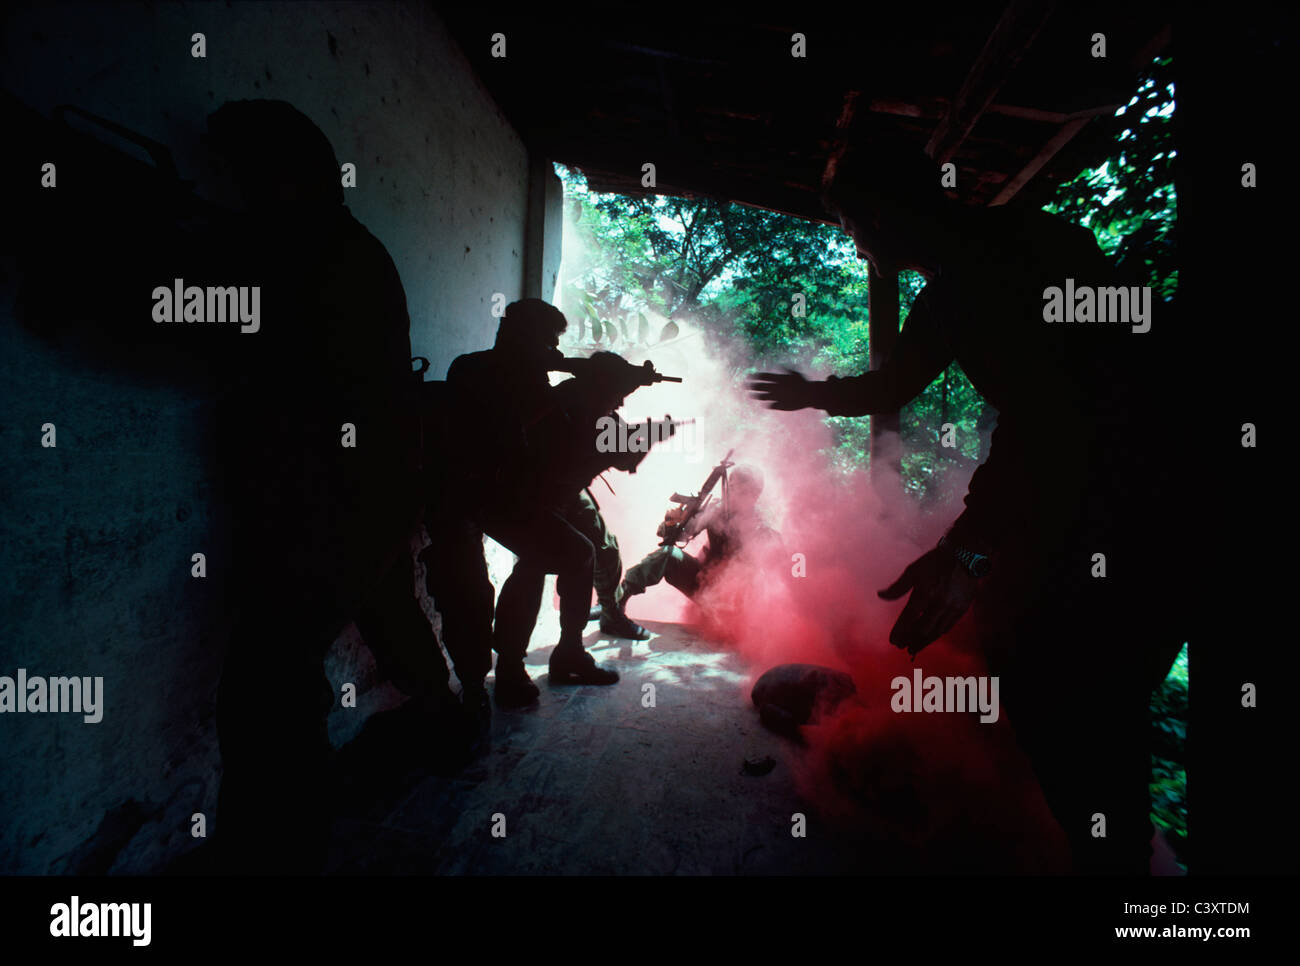 A counter-terrorist commando unit in Latin America trained by Israeli expert. Stock Photo